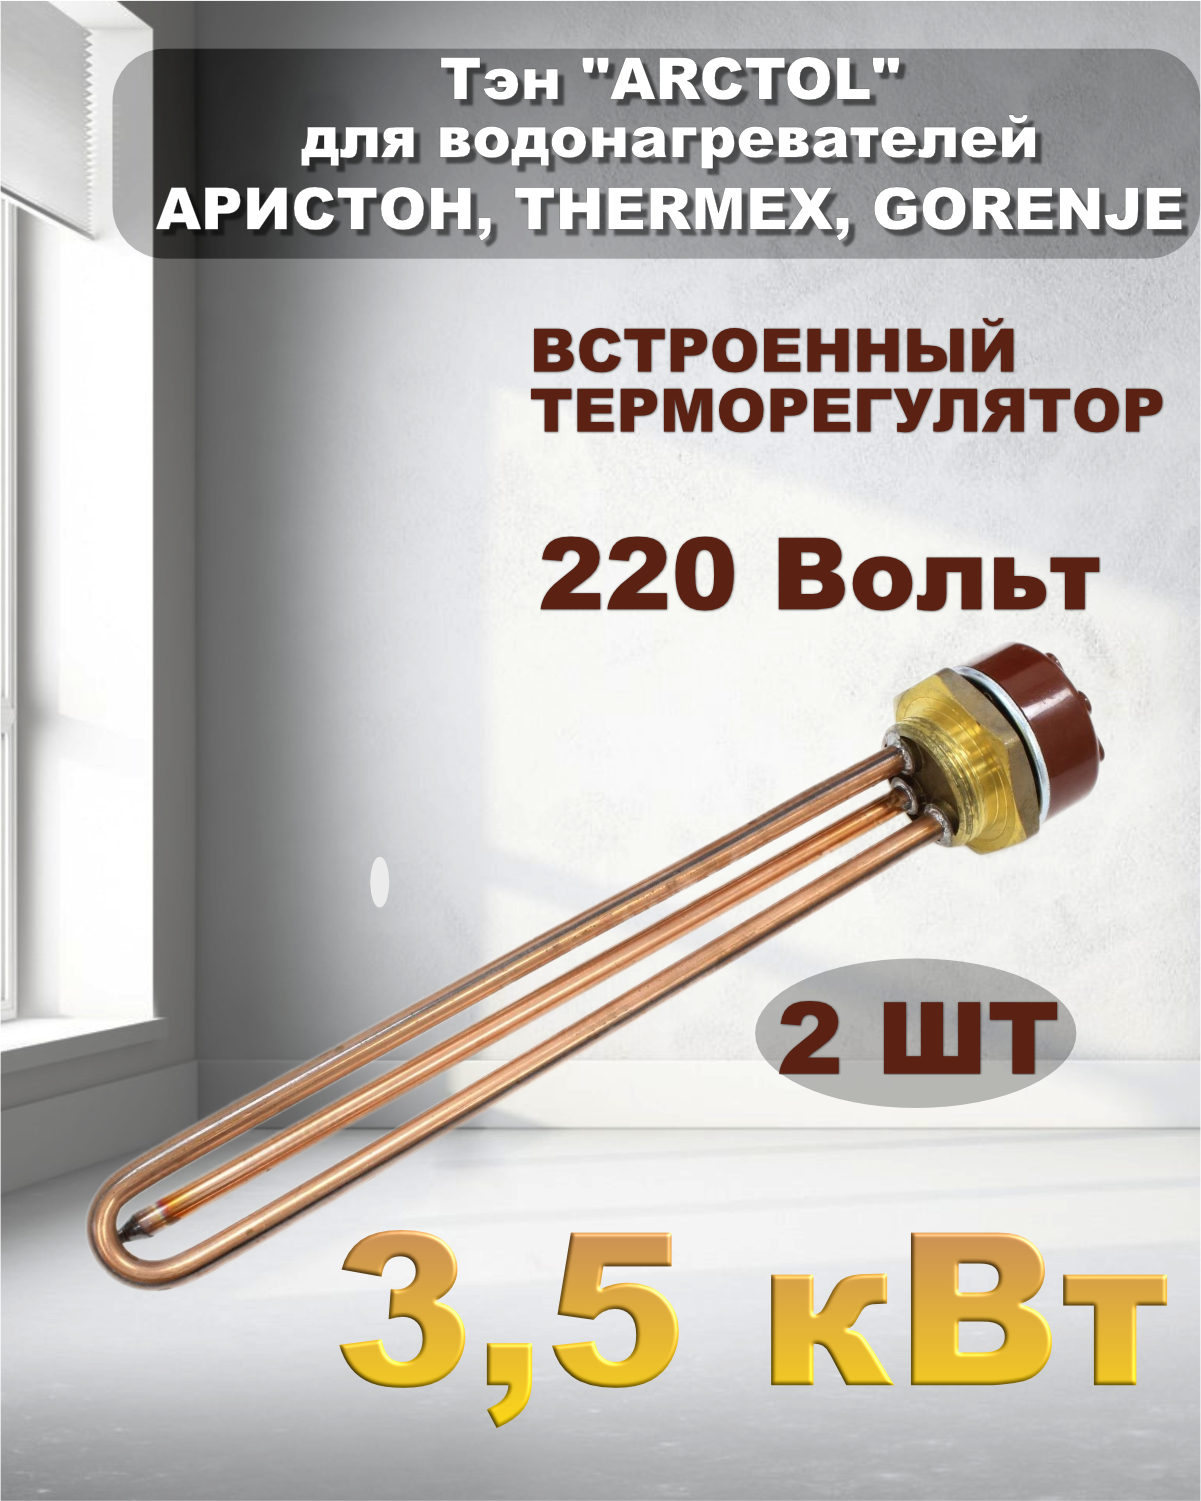 Тэн ARCTOL 3,5 кВт комплект 2шт для водонагревателей Аристон thermex gorenje